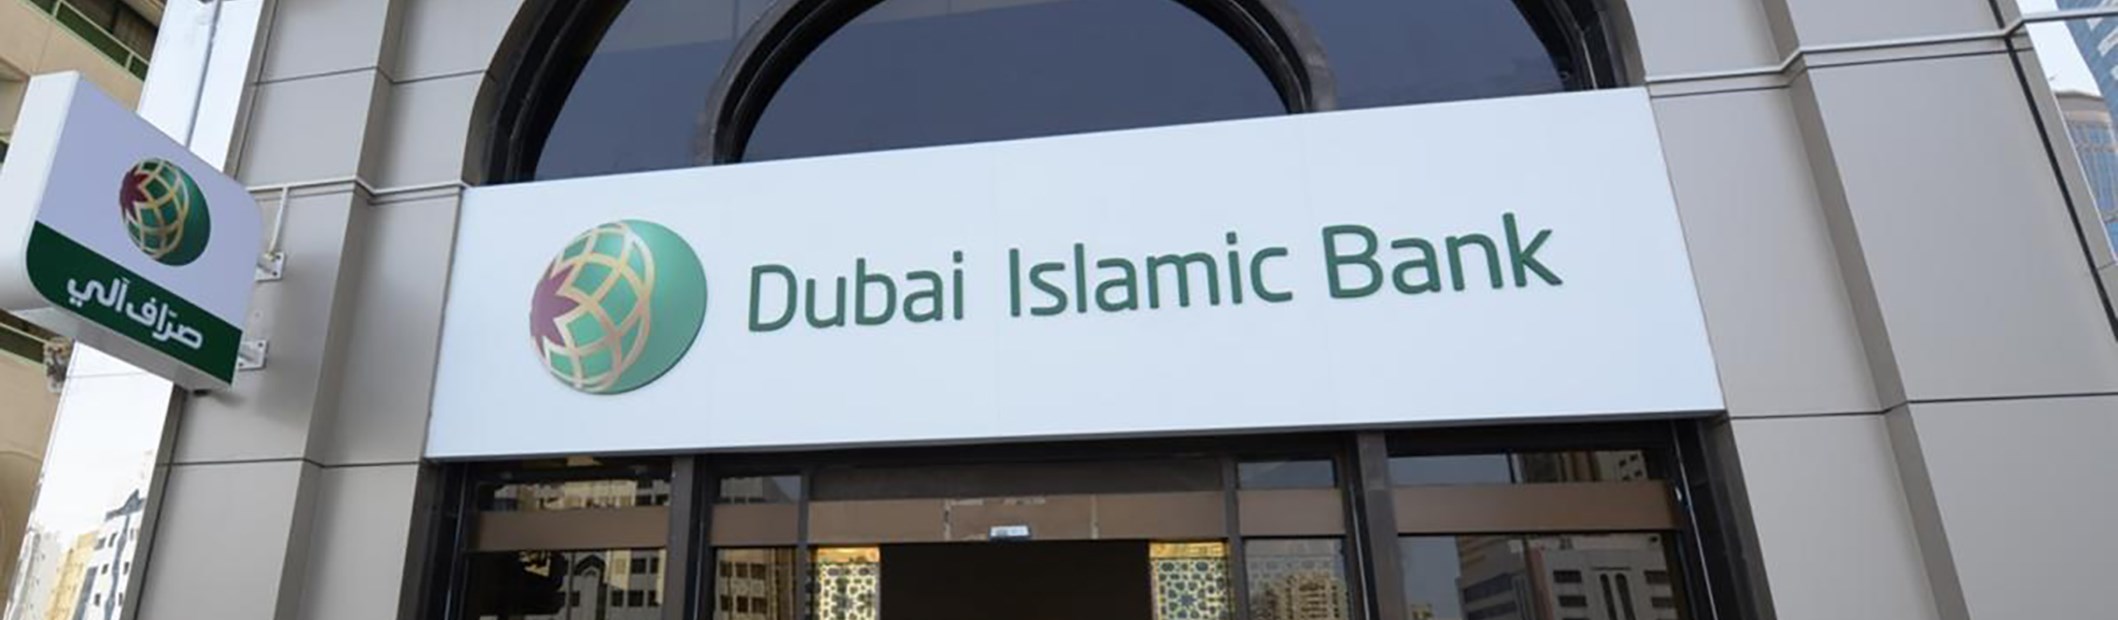 WAM: Arada joins with Dubai Islamic Bank to provide home financing solutions